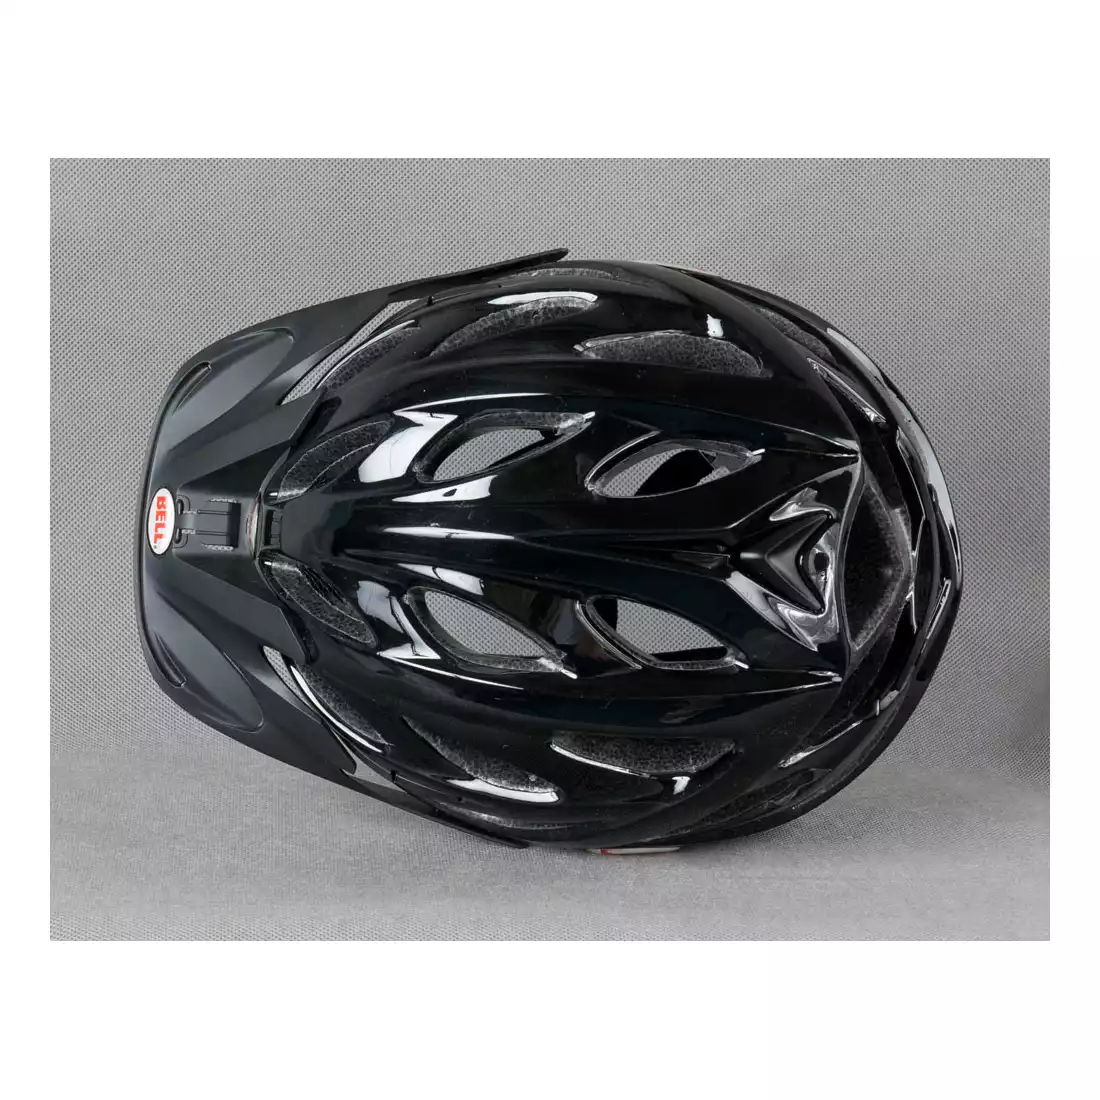 BELL - damski kask rowerowy ARELLA , kolor: Czarny